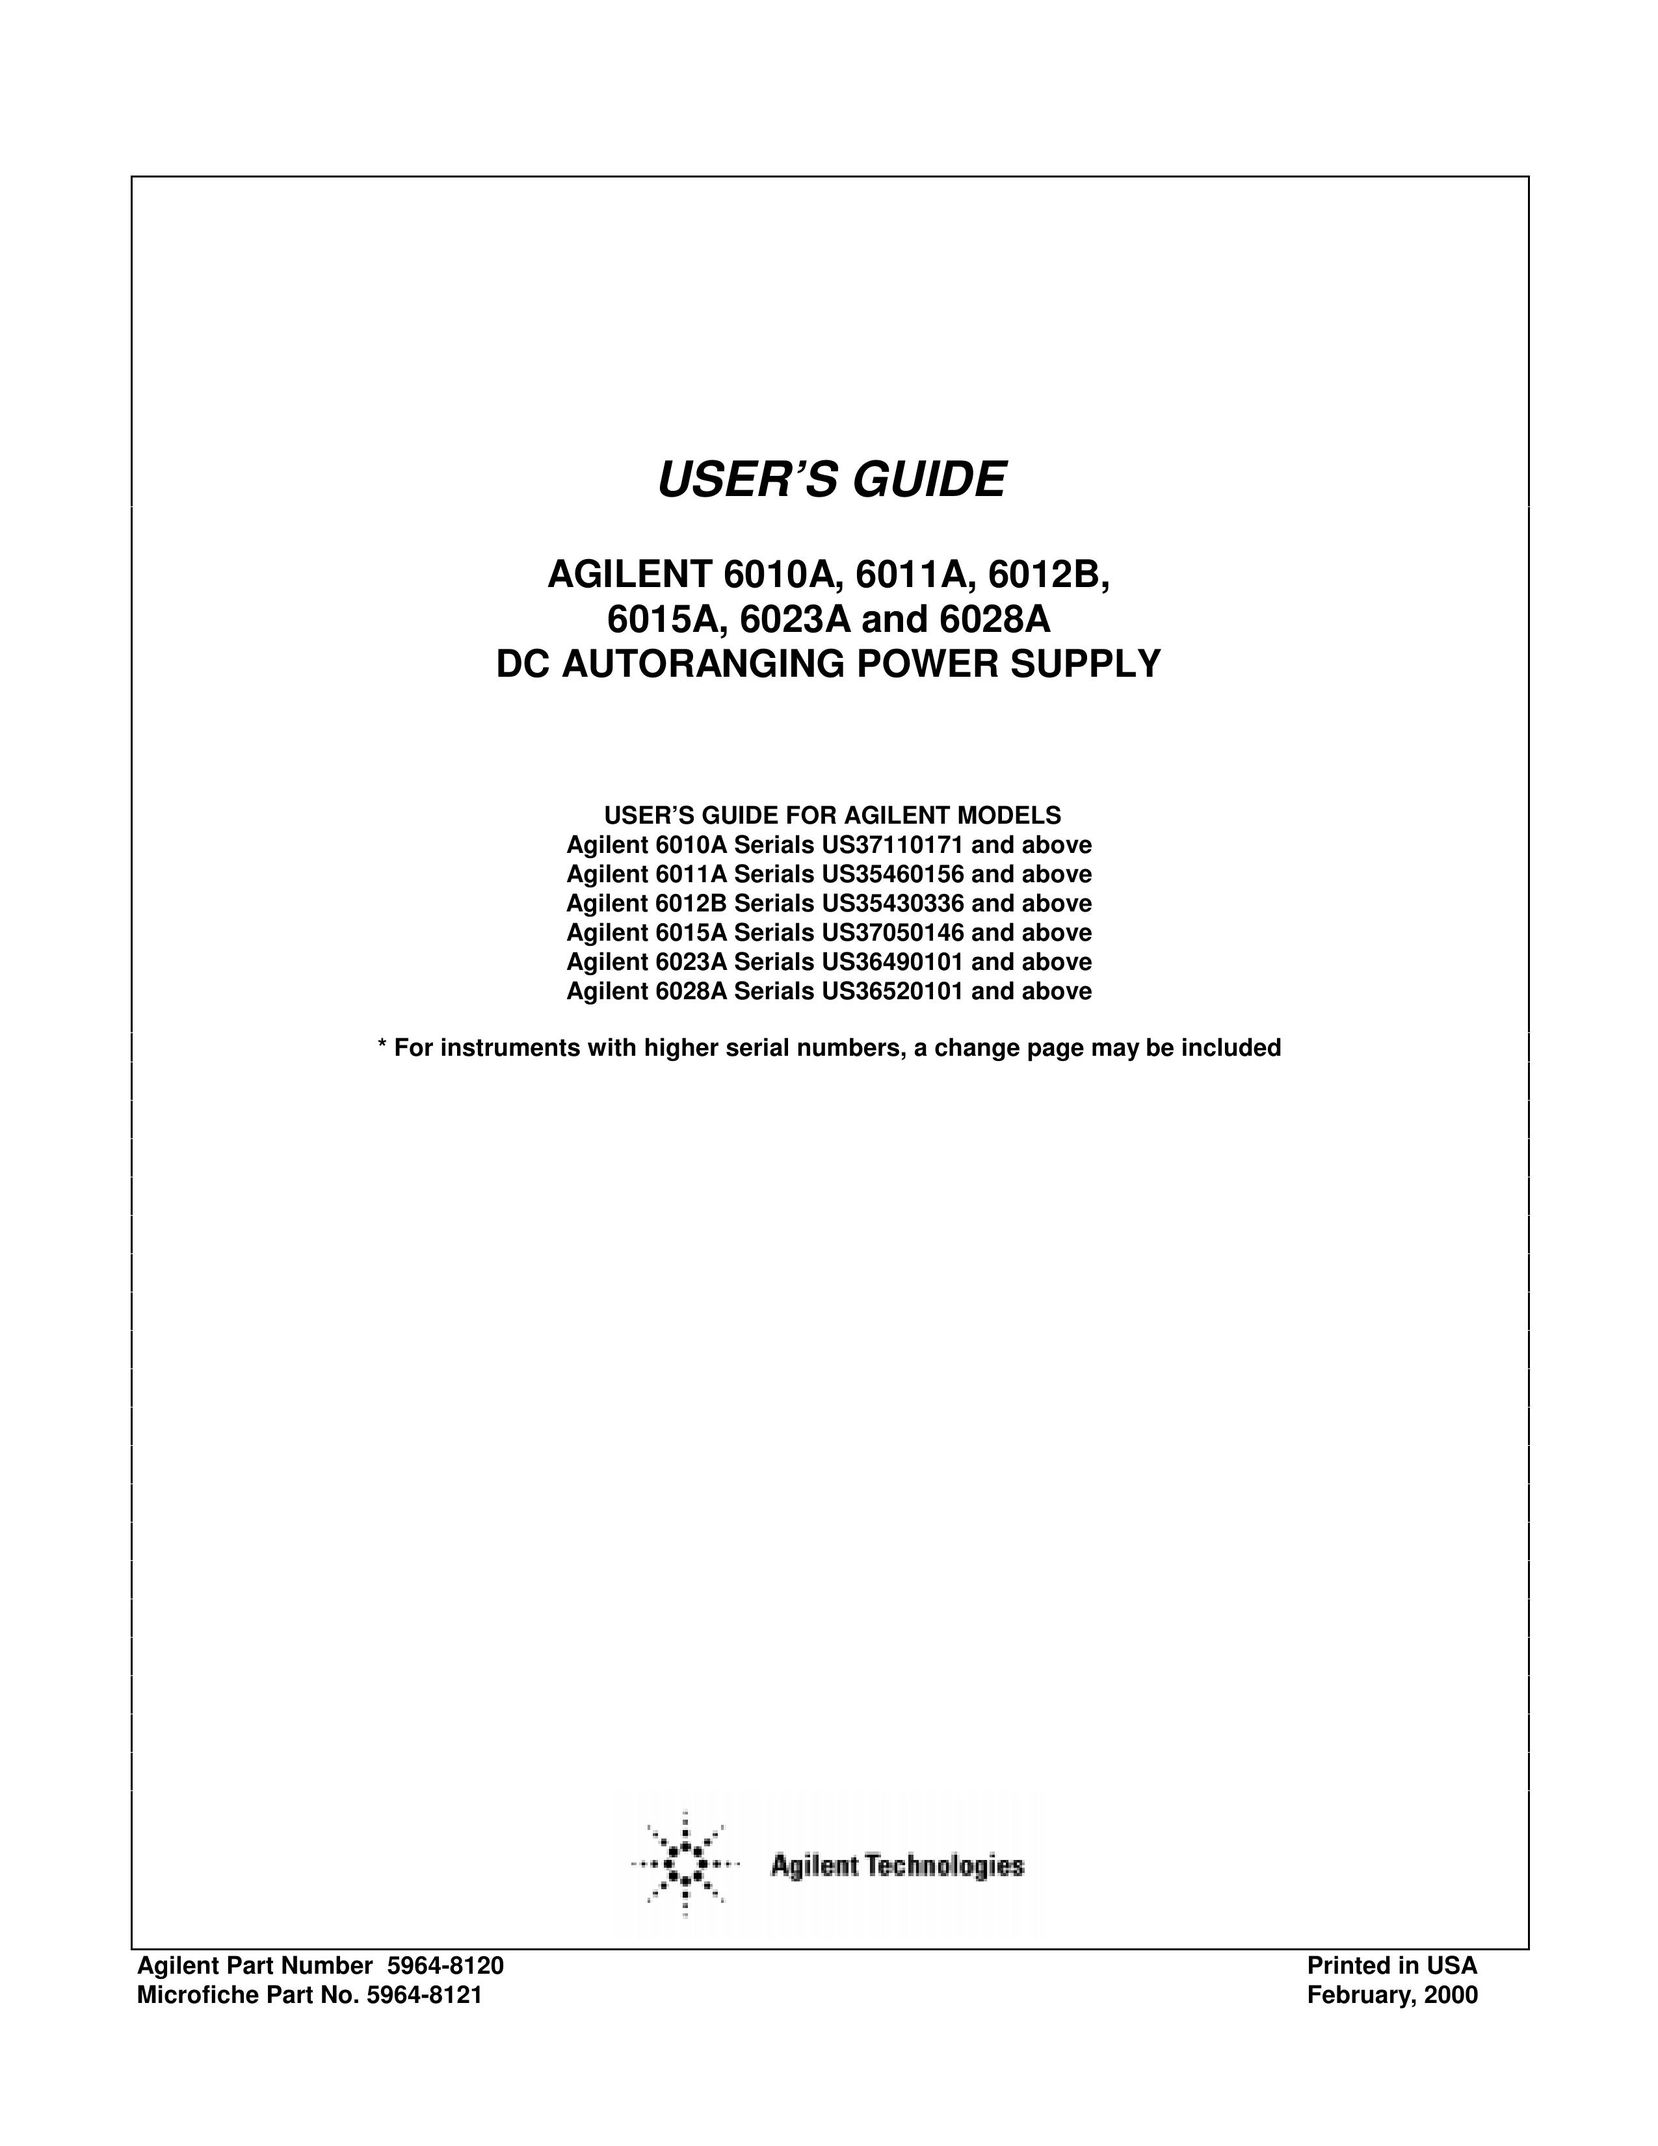 Agilent Technologies 6011A Welding System User Manual